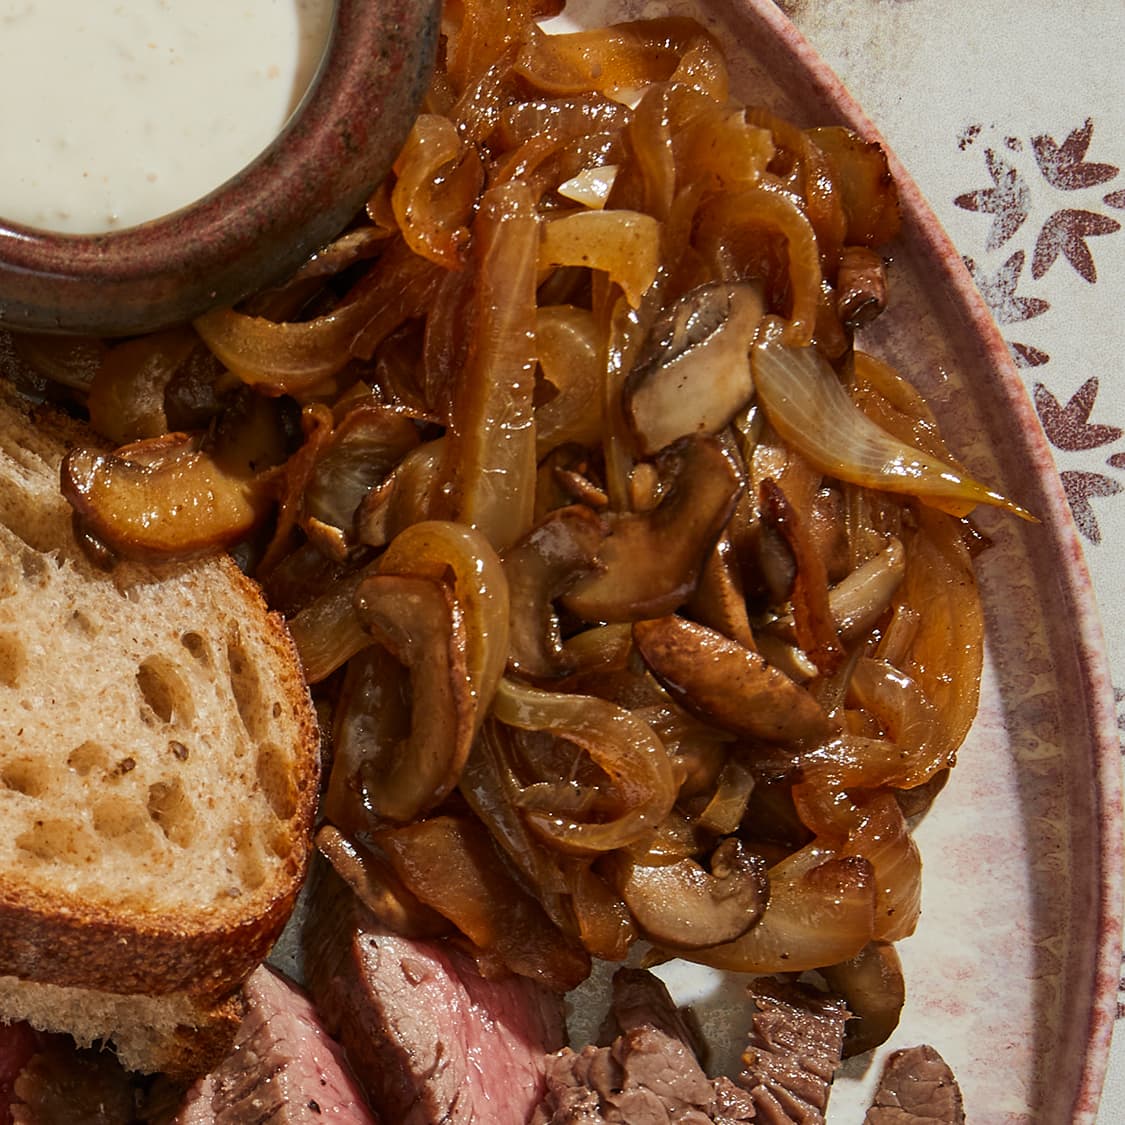 https://fleishigs.com/images/mobile-app/recipes/764-list-caramelized-onions-and-mushrooms.jpg